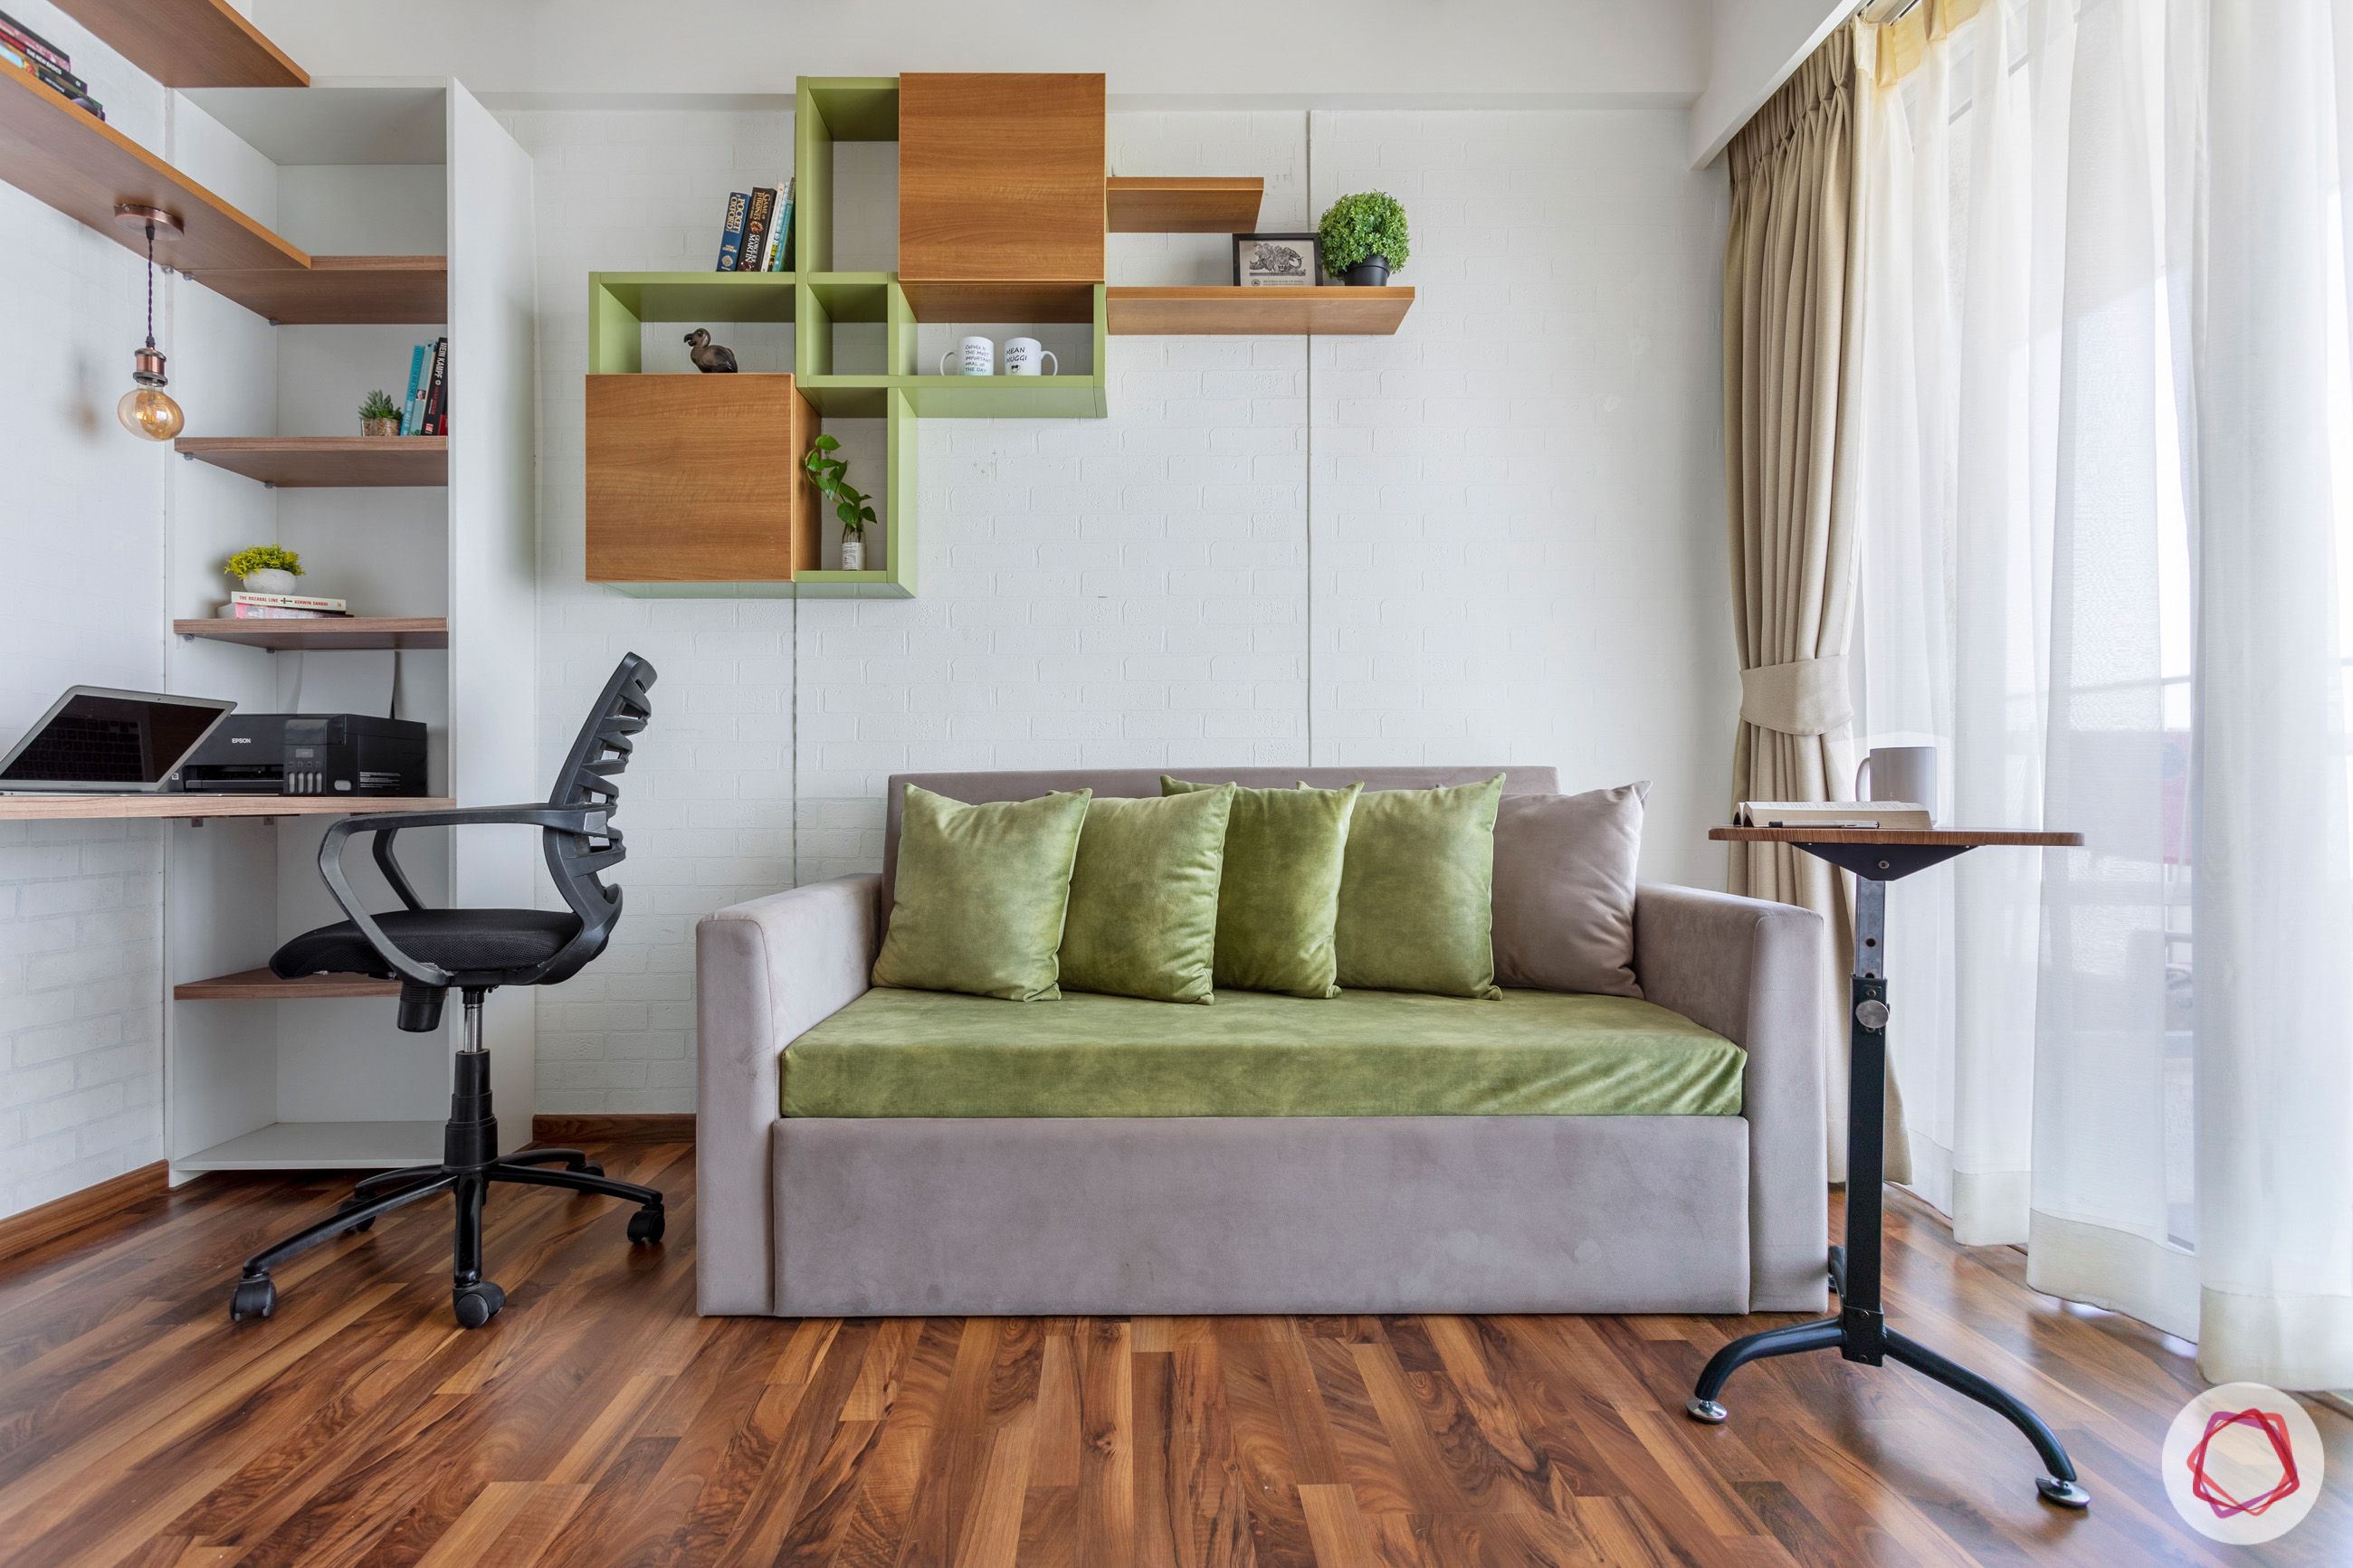 study-window-olive-grey-sofa-bed-chair